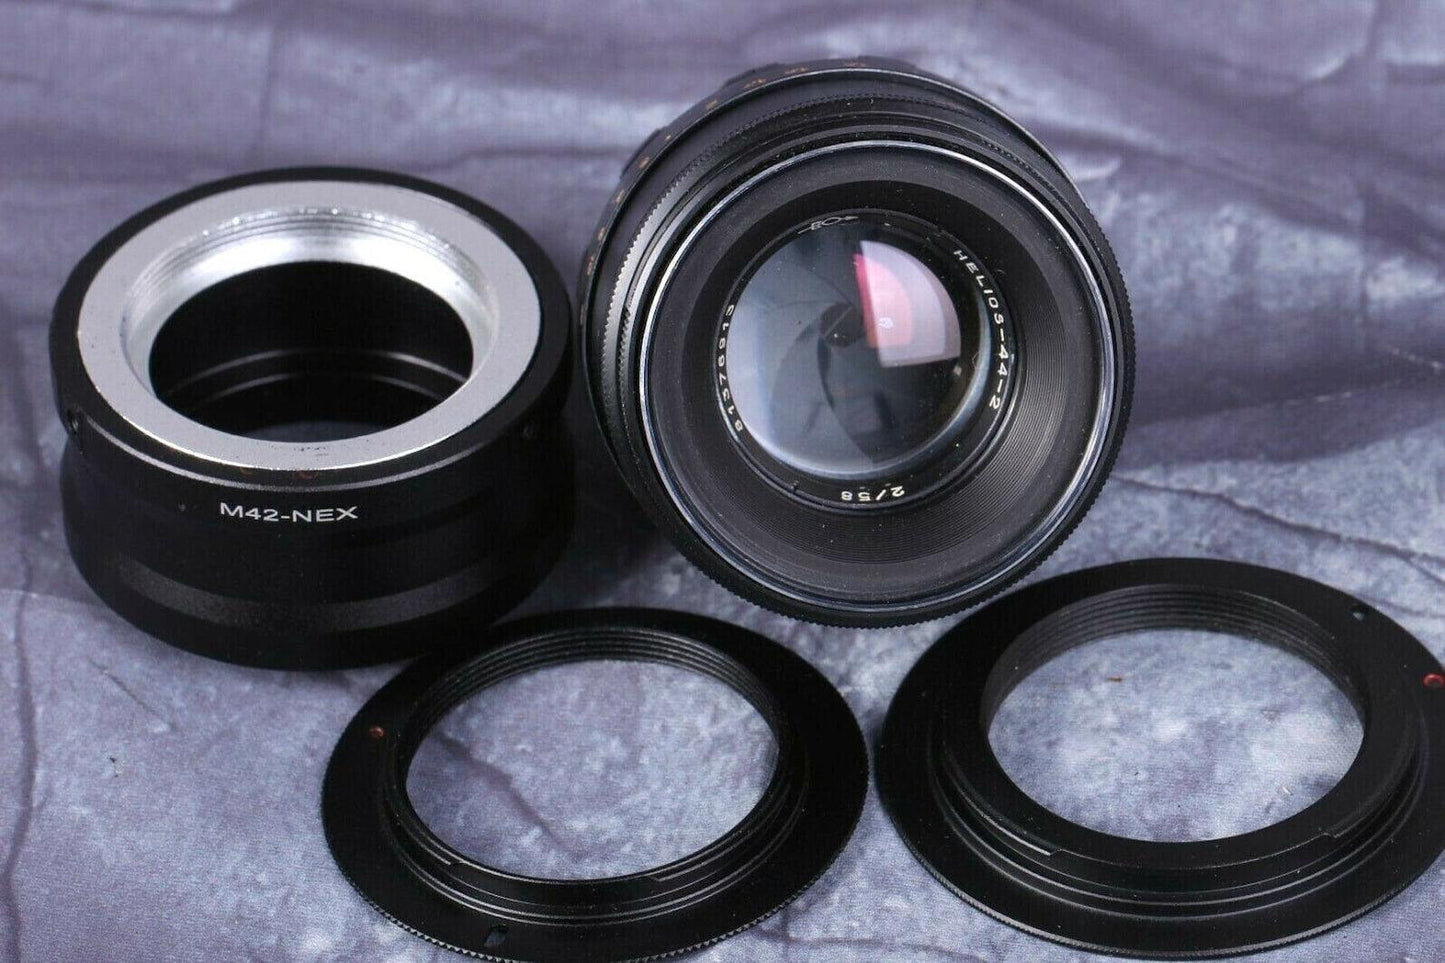 Helios-44-2 58mm F2 Bokeh Portrait Lens DSLR Soviet with SONY NEX